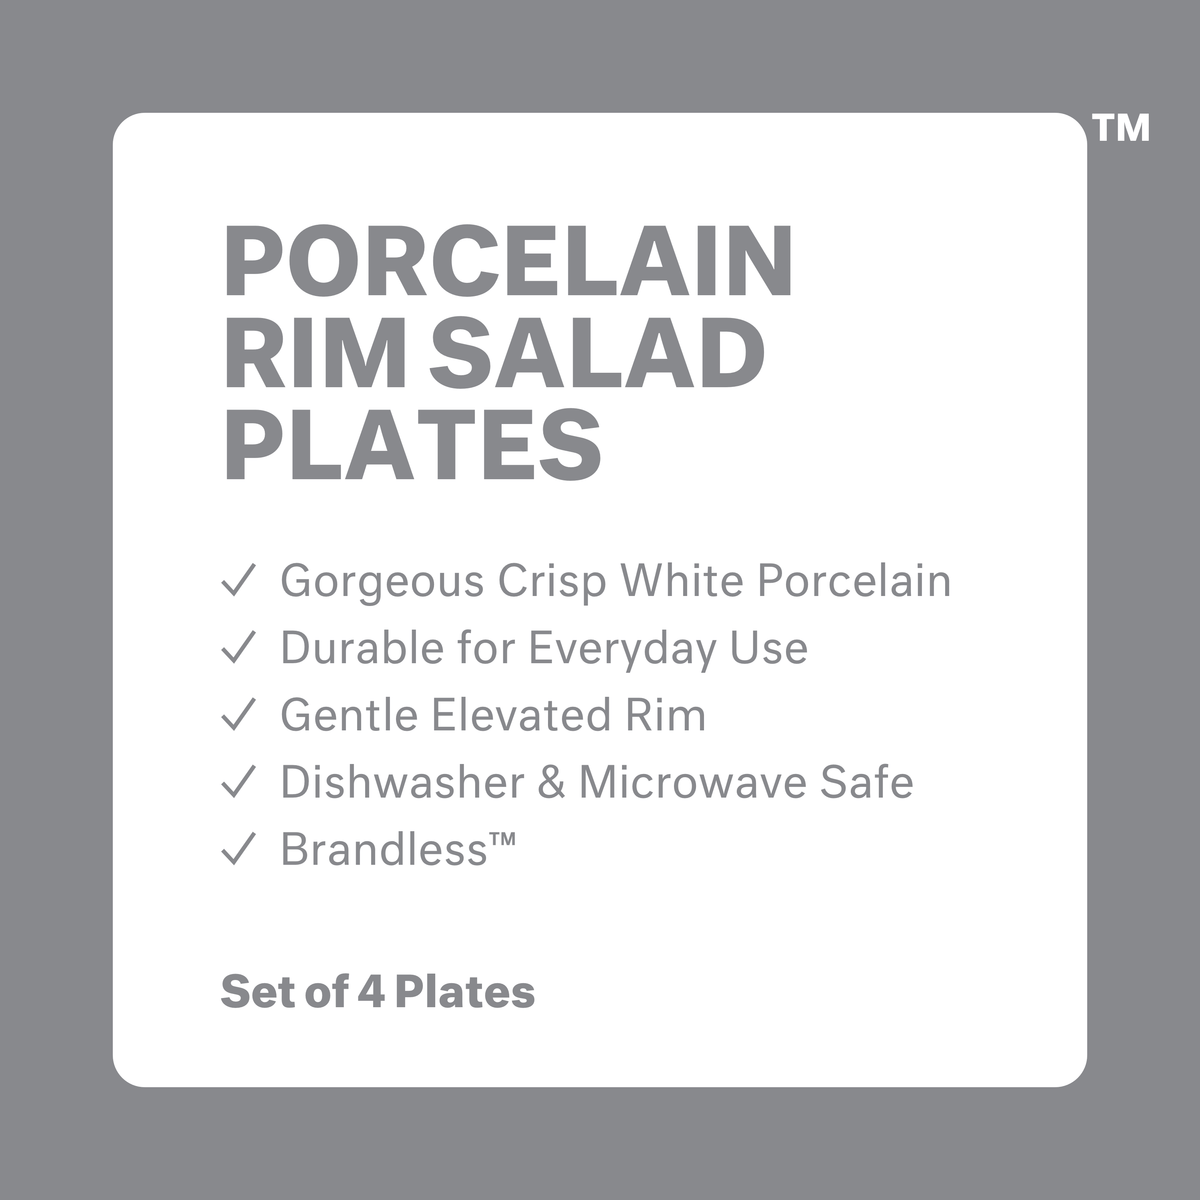 Porcelain rim salad plates: gorgeous crisp white porcelain, durable for everyday use, gentle elevated rim, dishwasher and microwave safe, Brandless. Set of 4 plates.